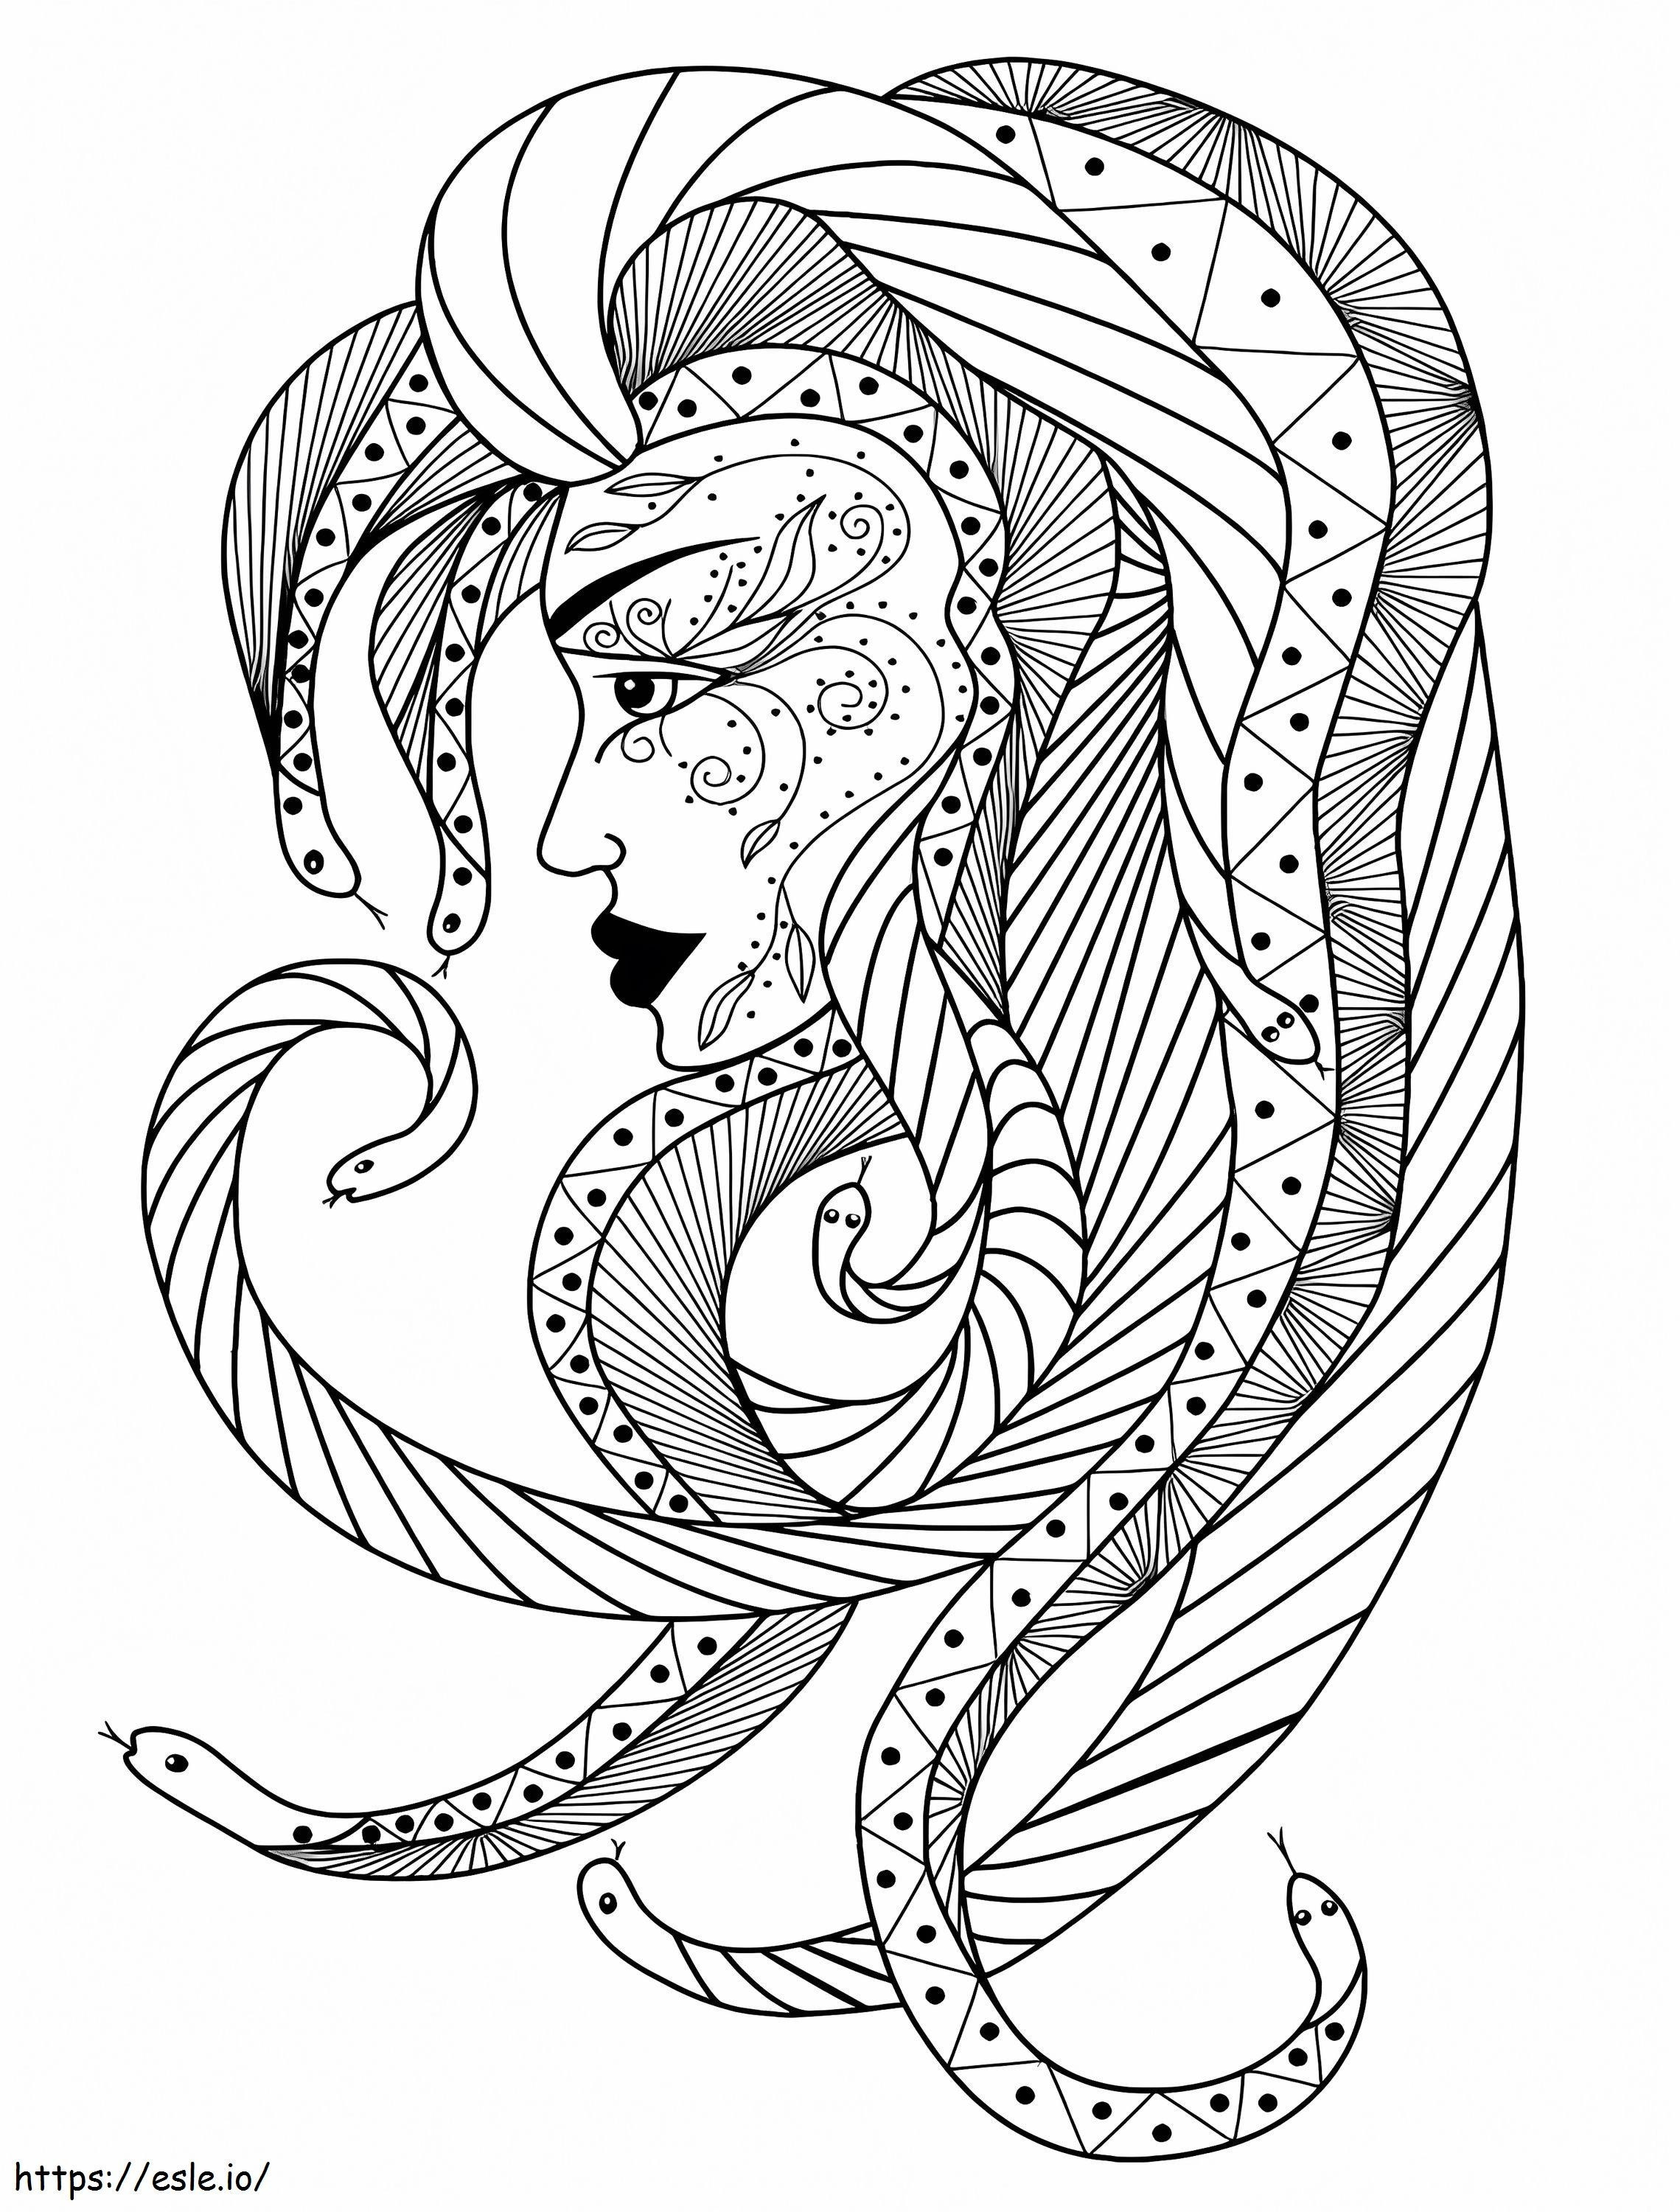 Mythology Medusa coloring page